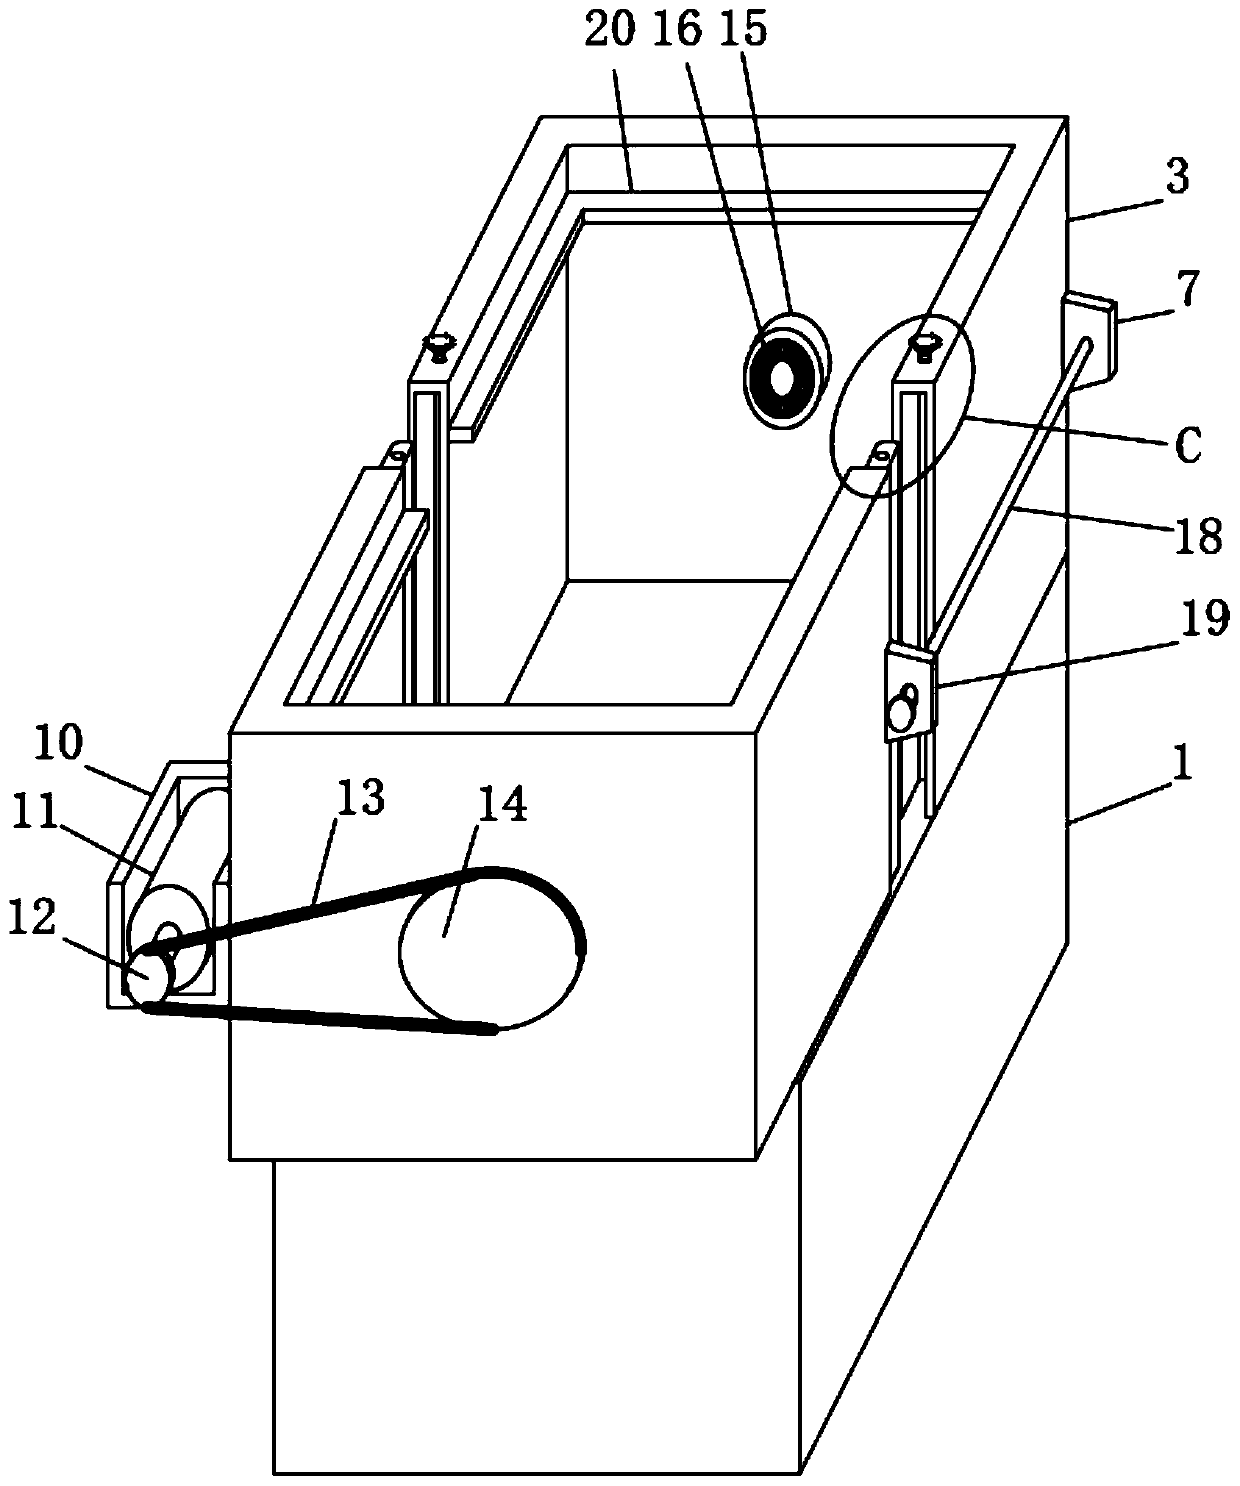 Cloth winding device with elasticizing mechanism